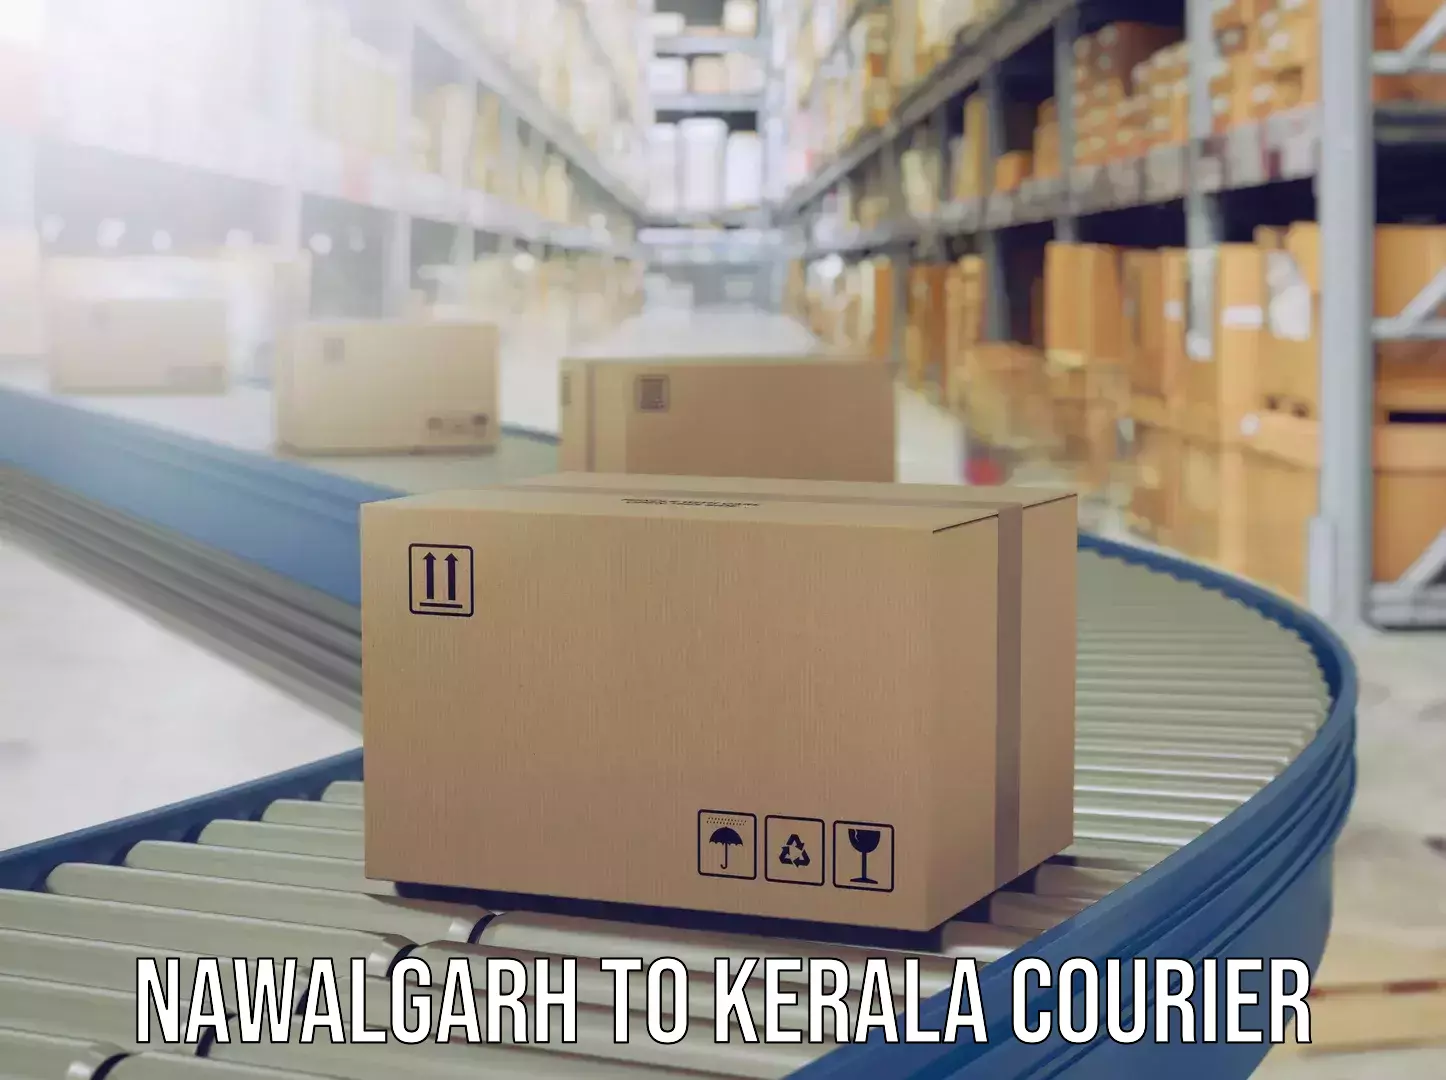 Luggage delivery network Nawalgarh to Kerala